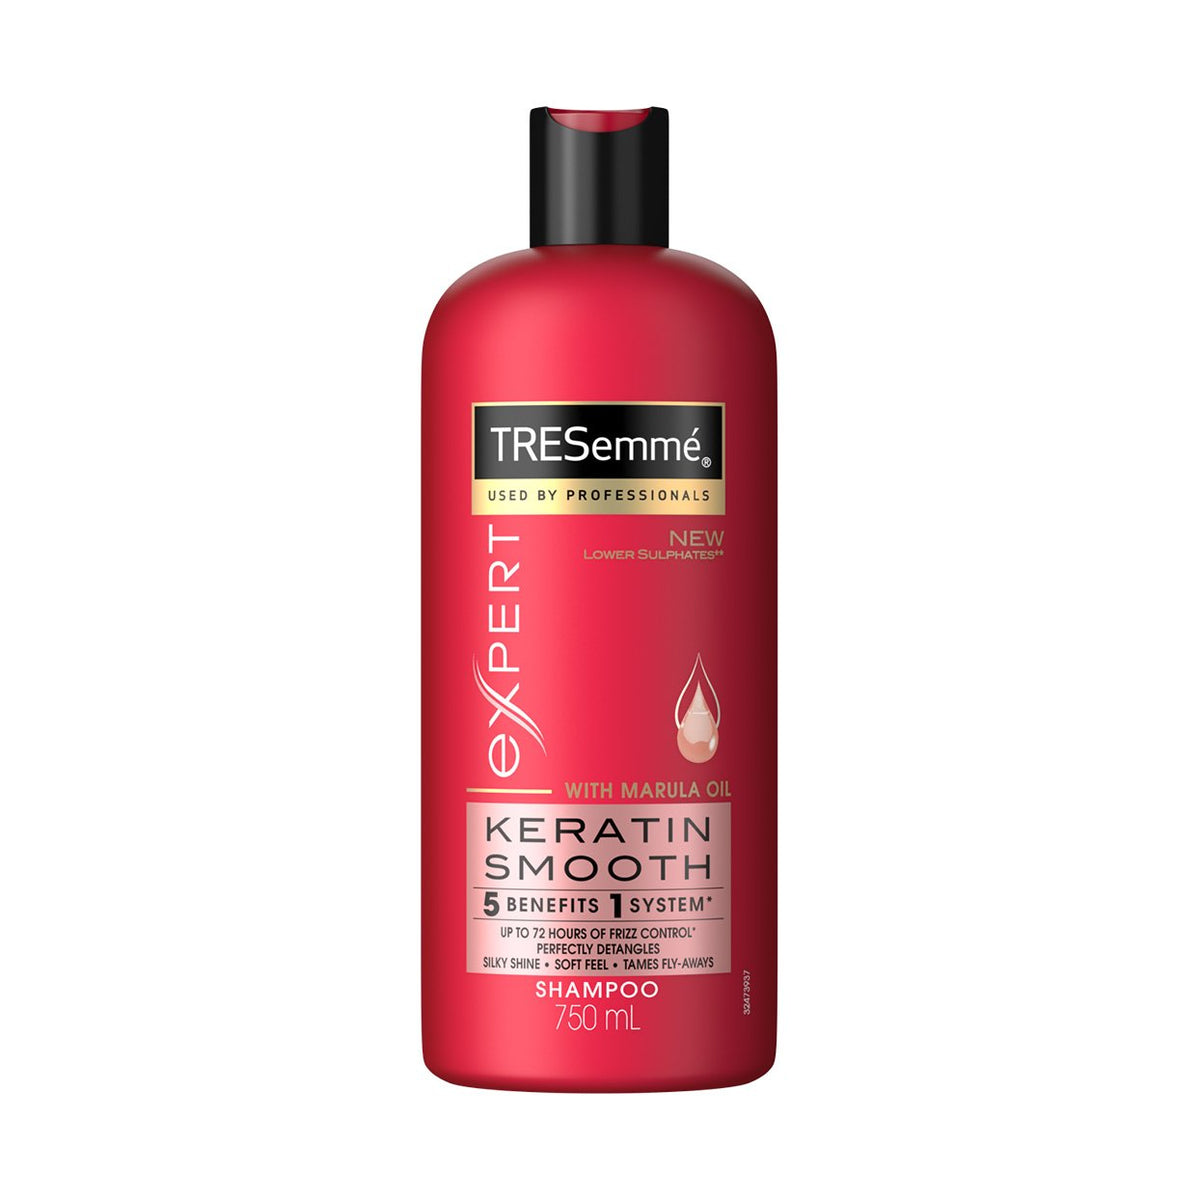 TRESemme Expert Selection Shampoo Keratin Smooth 750ml - Maximed